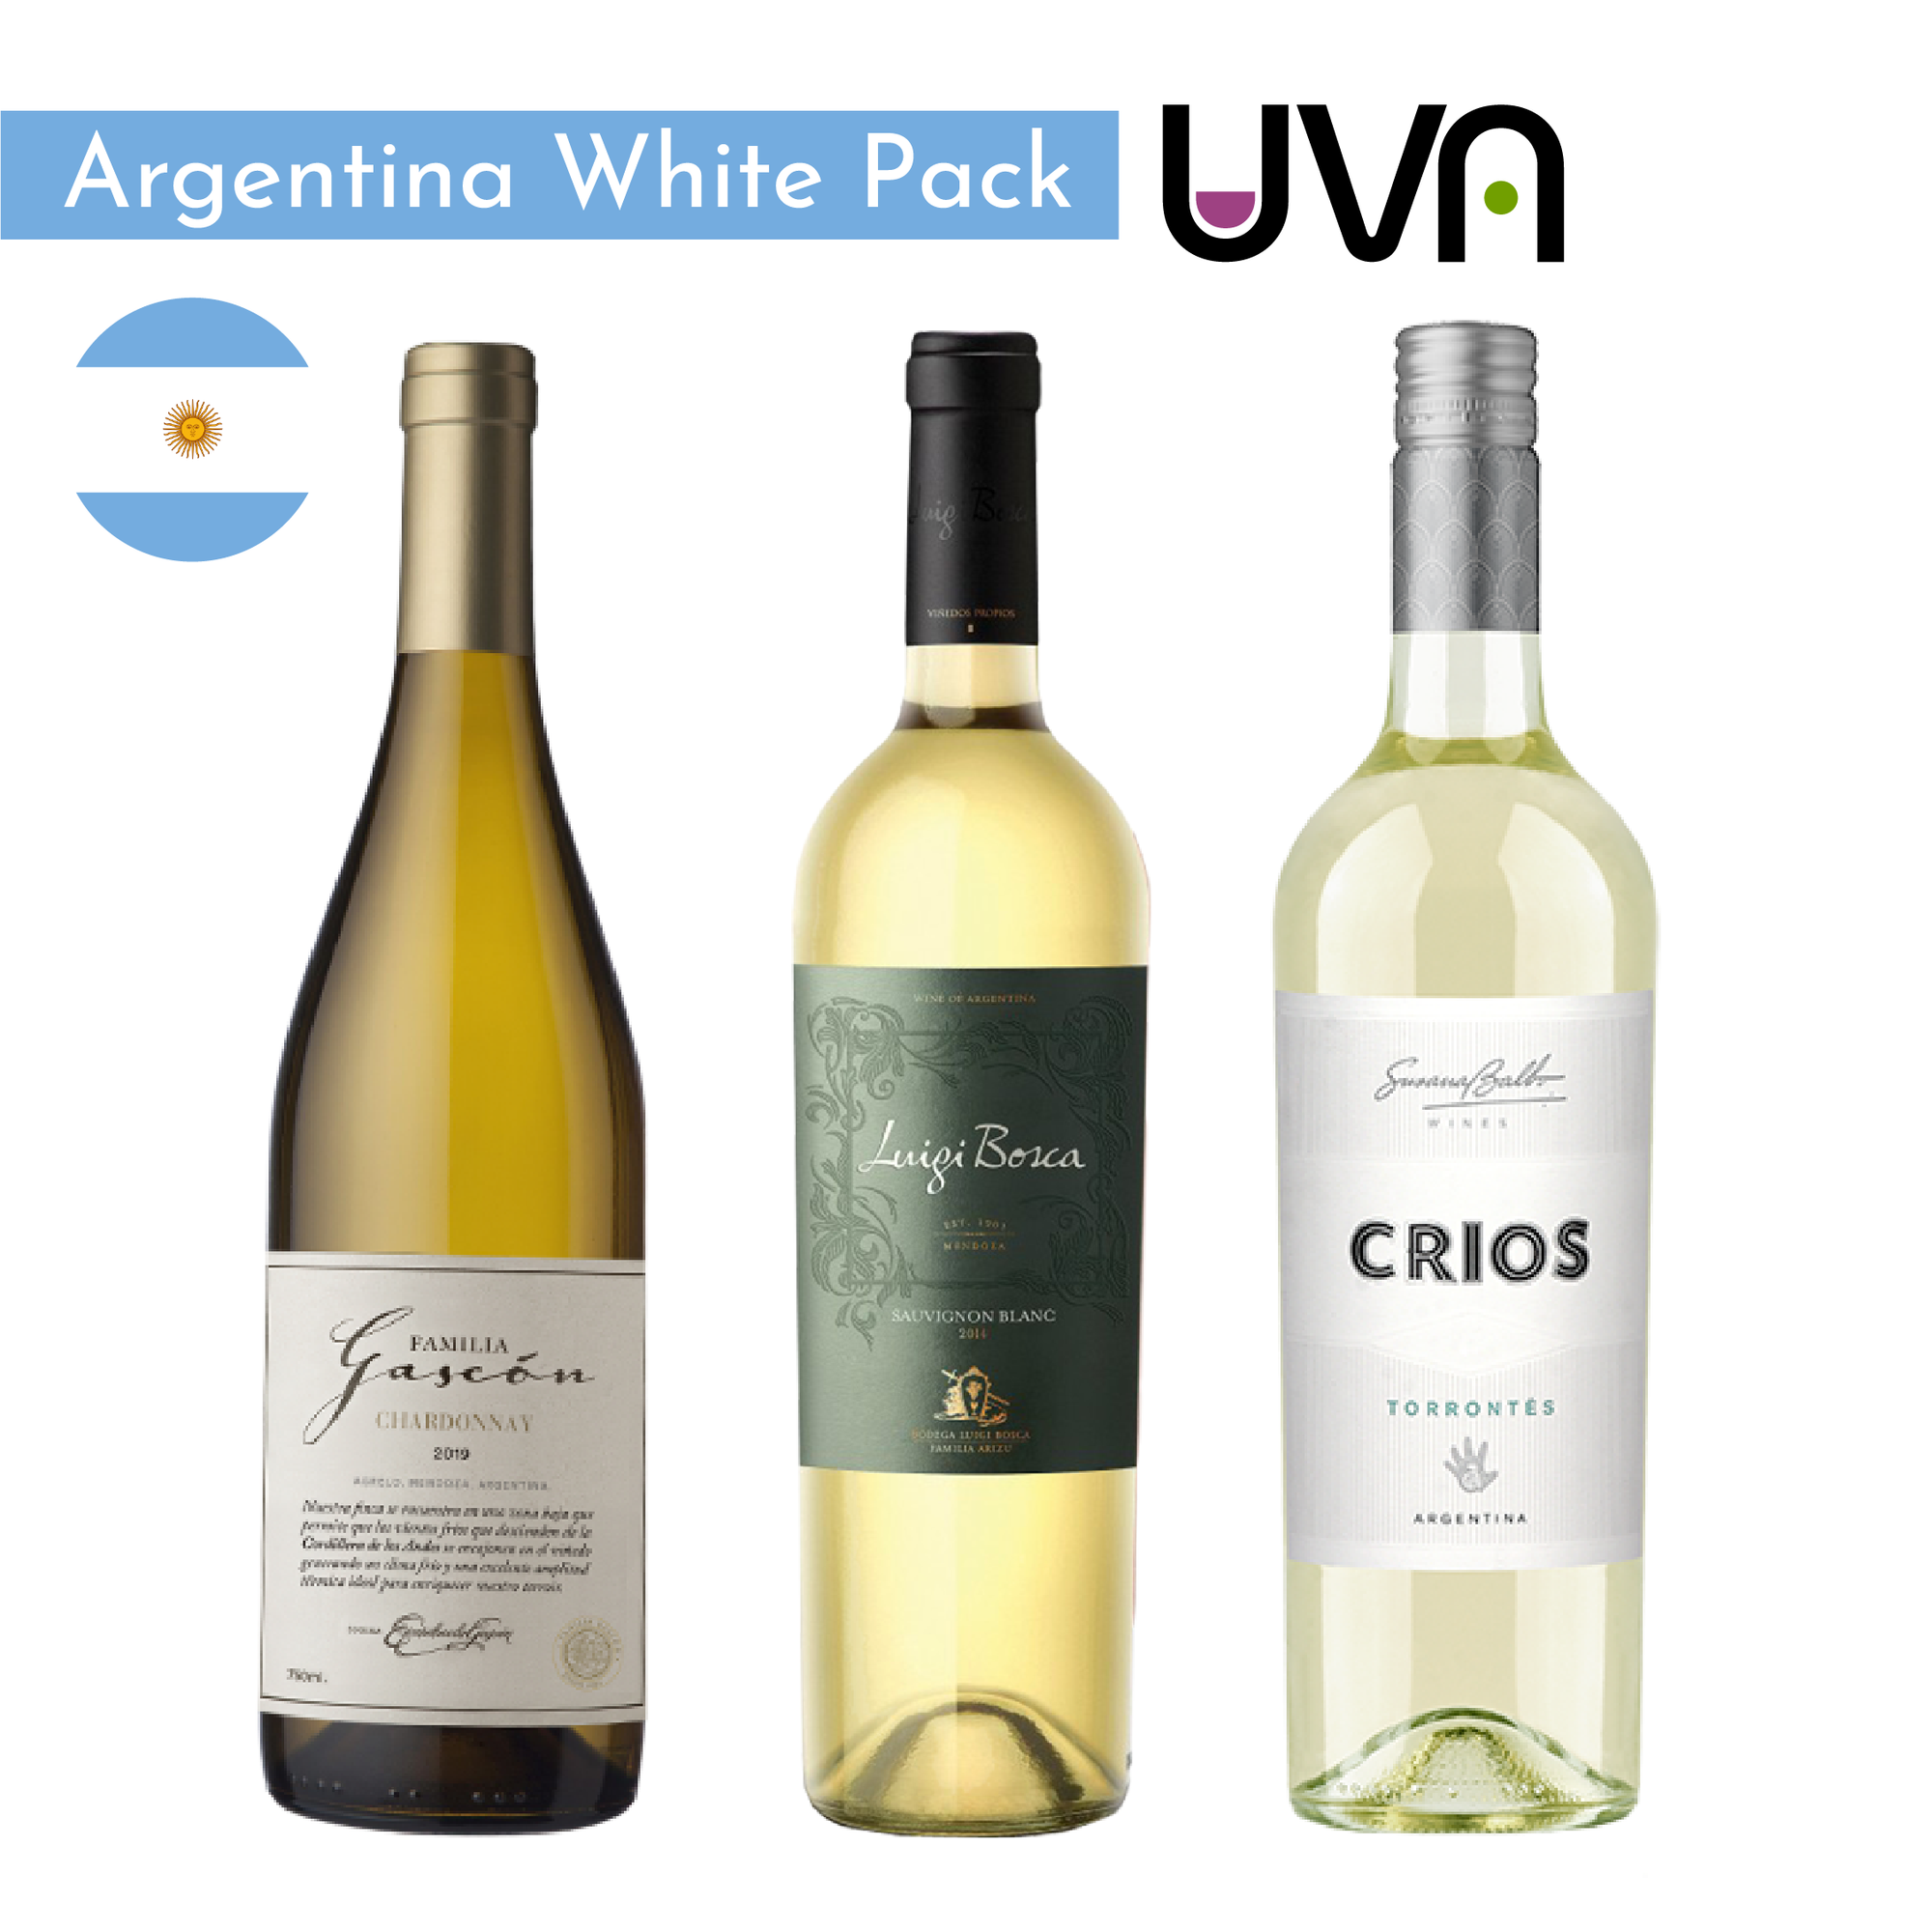 Argentina White Pack